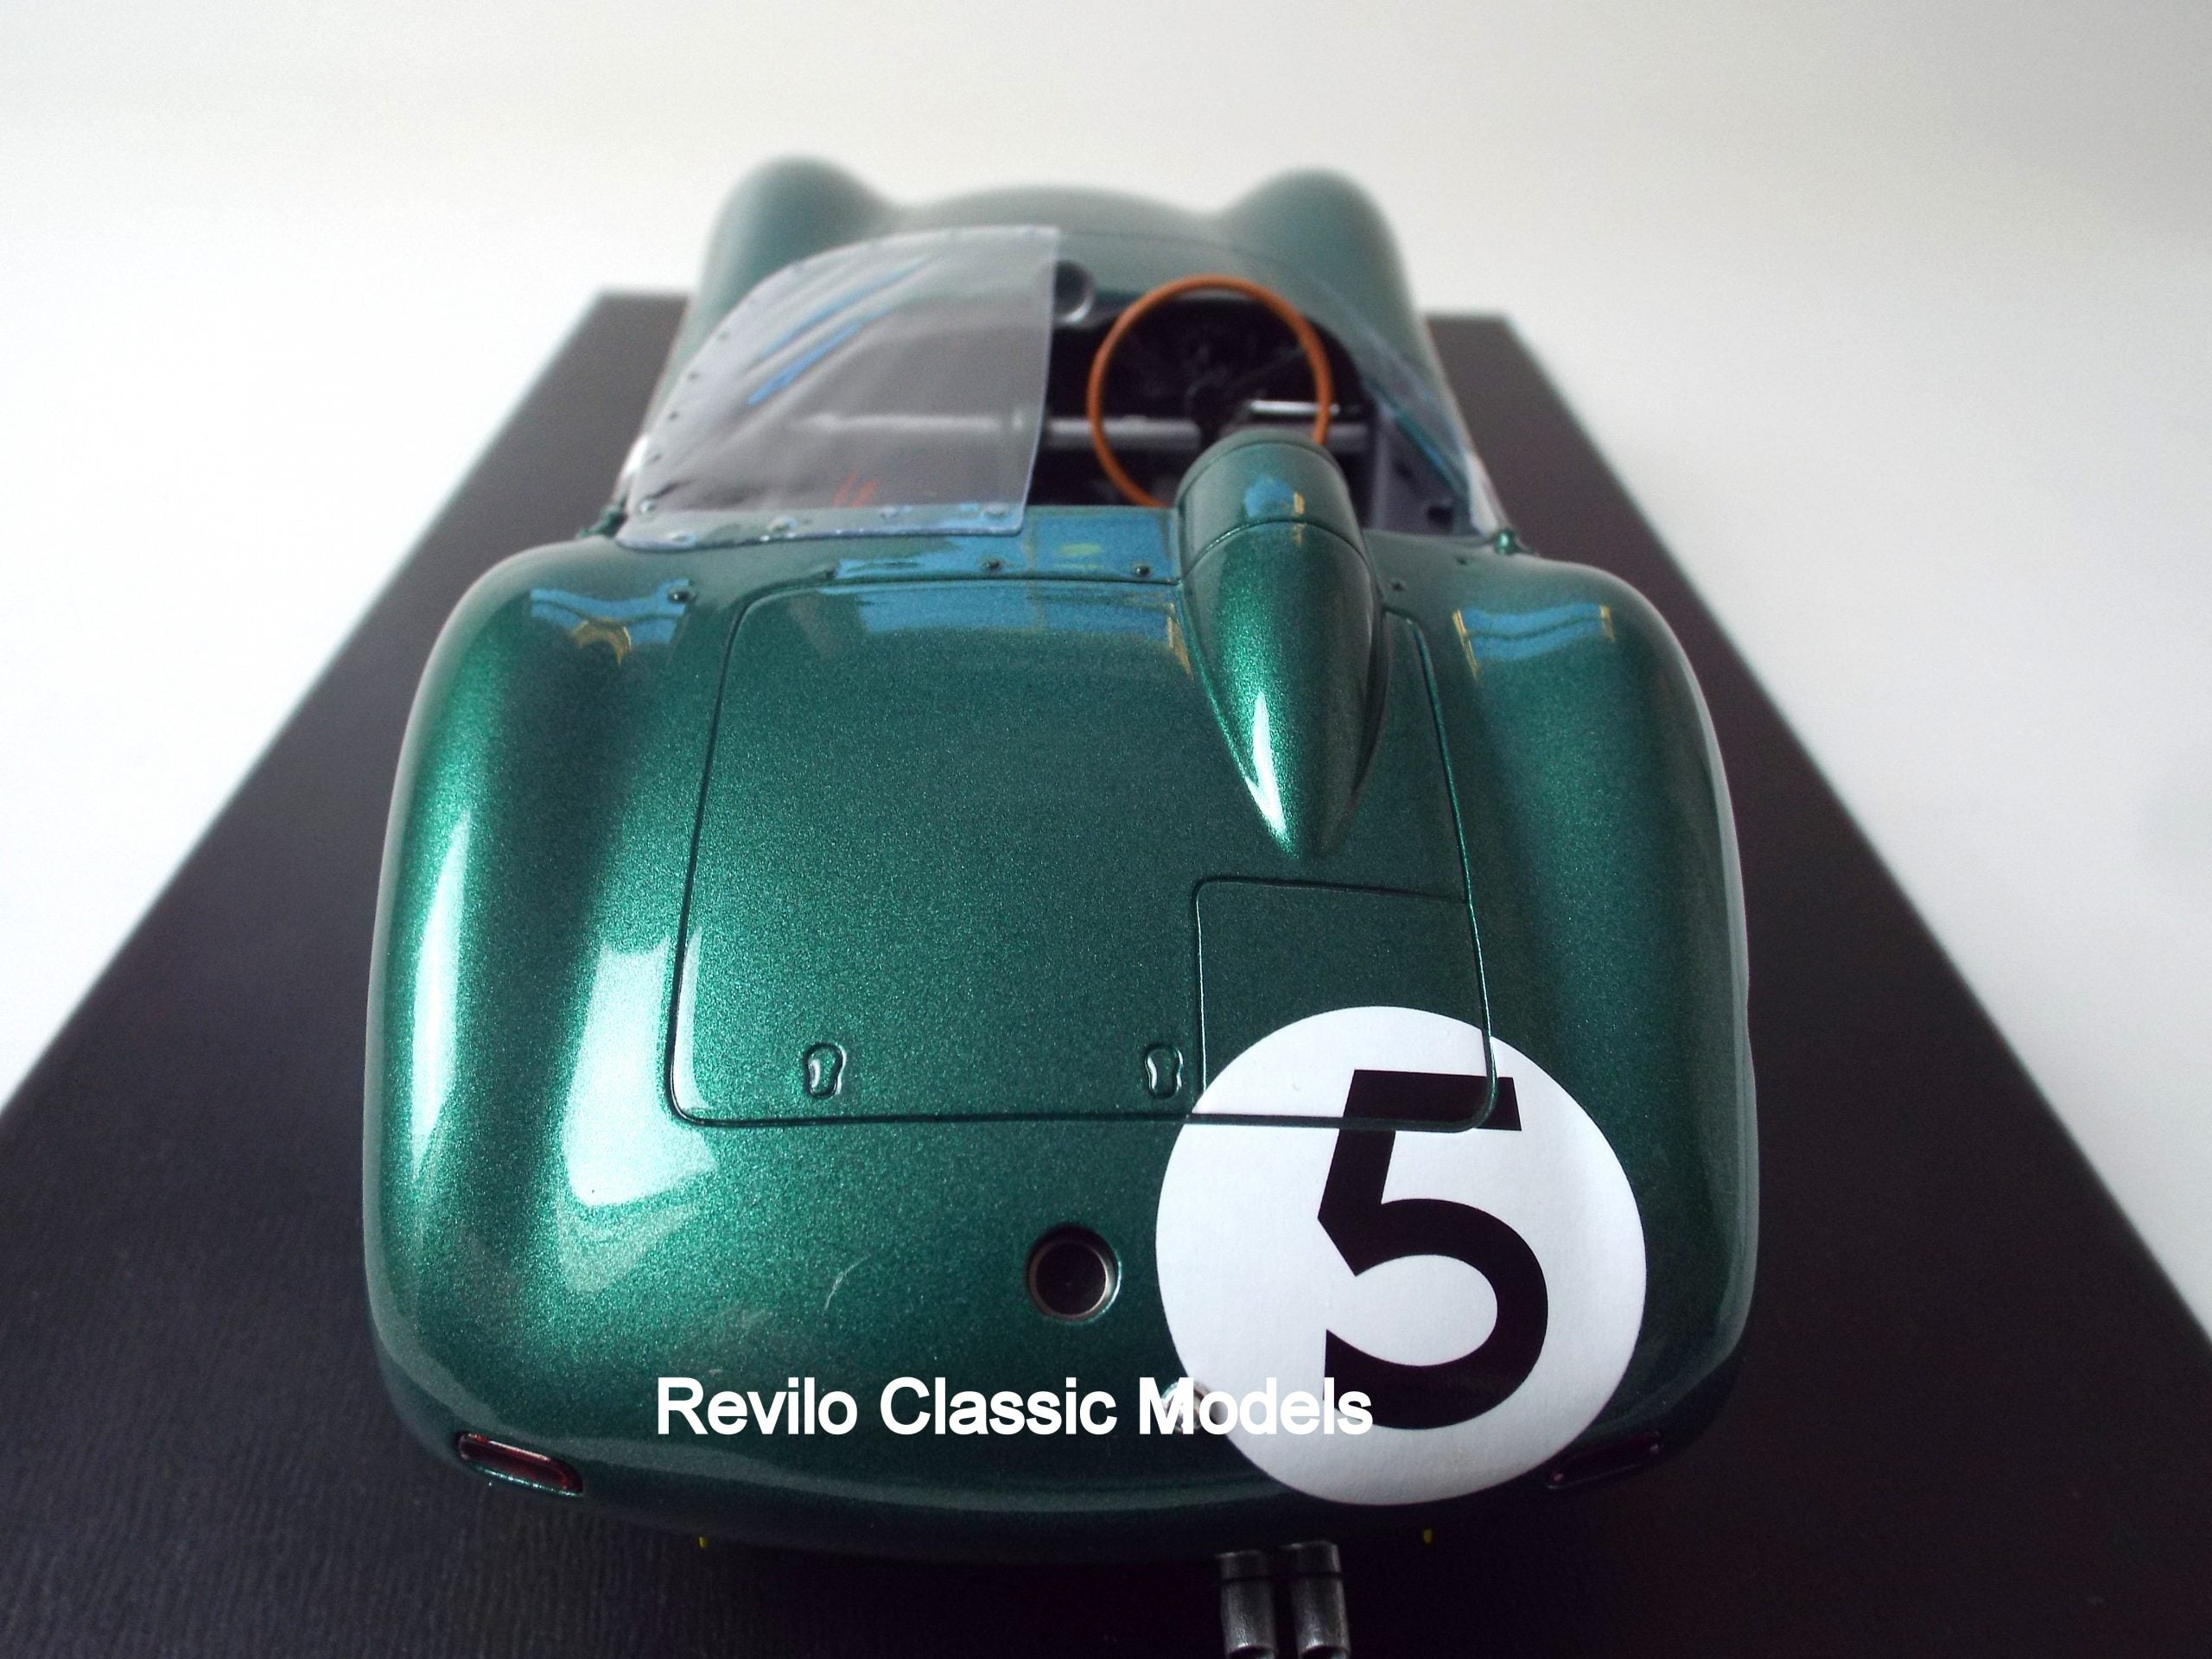 Aston Martin DBR1 Le Mans winner 1959